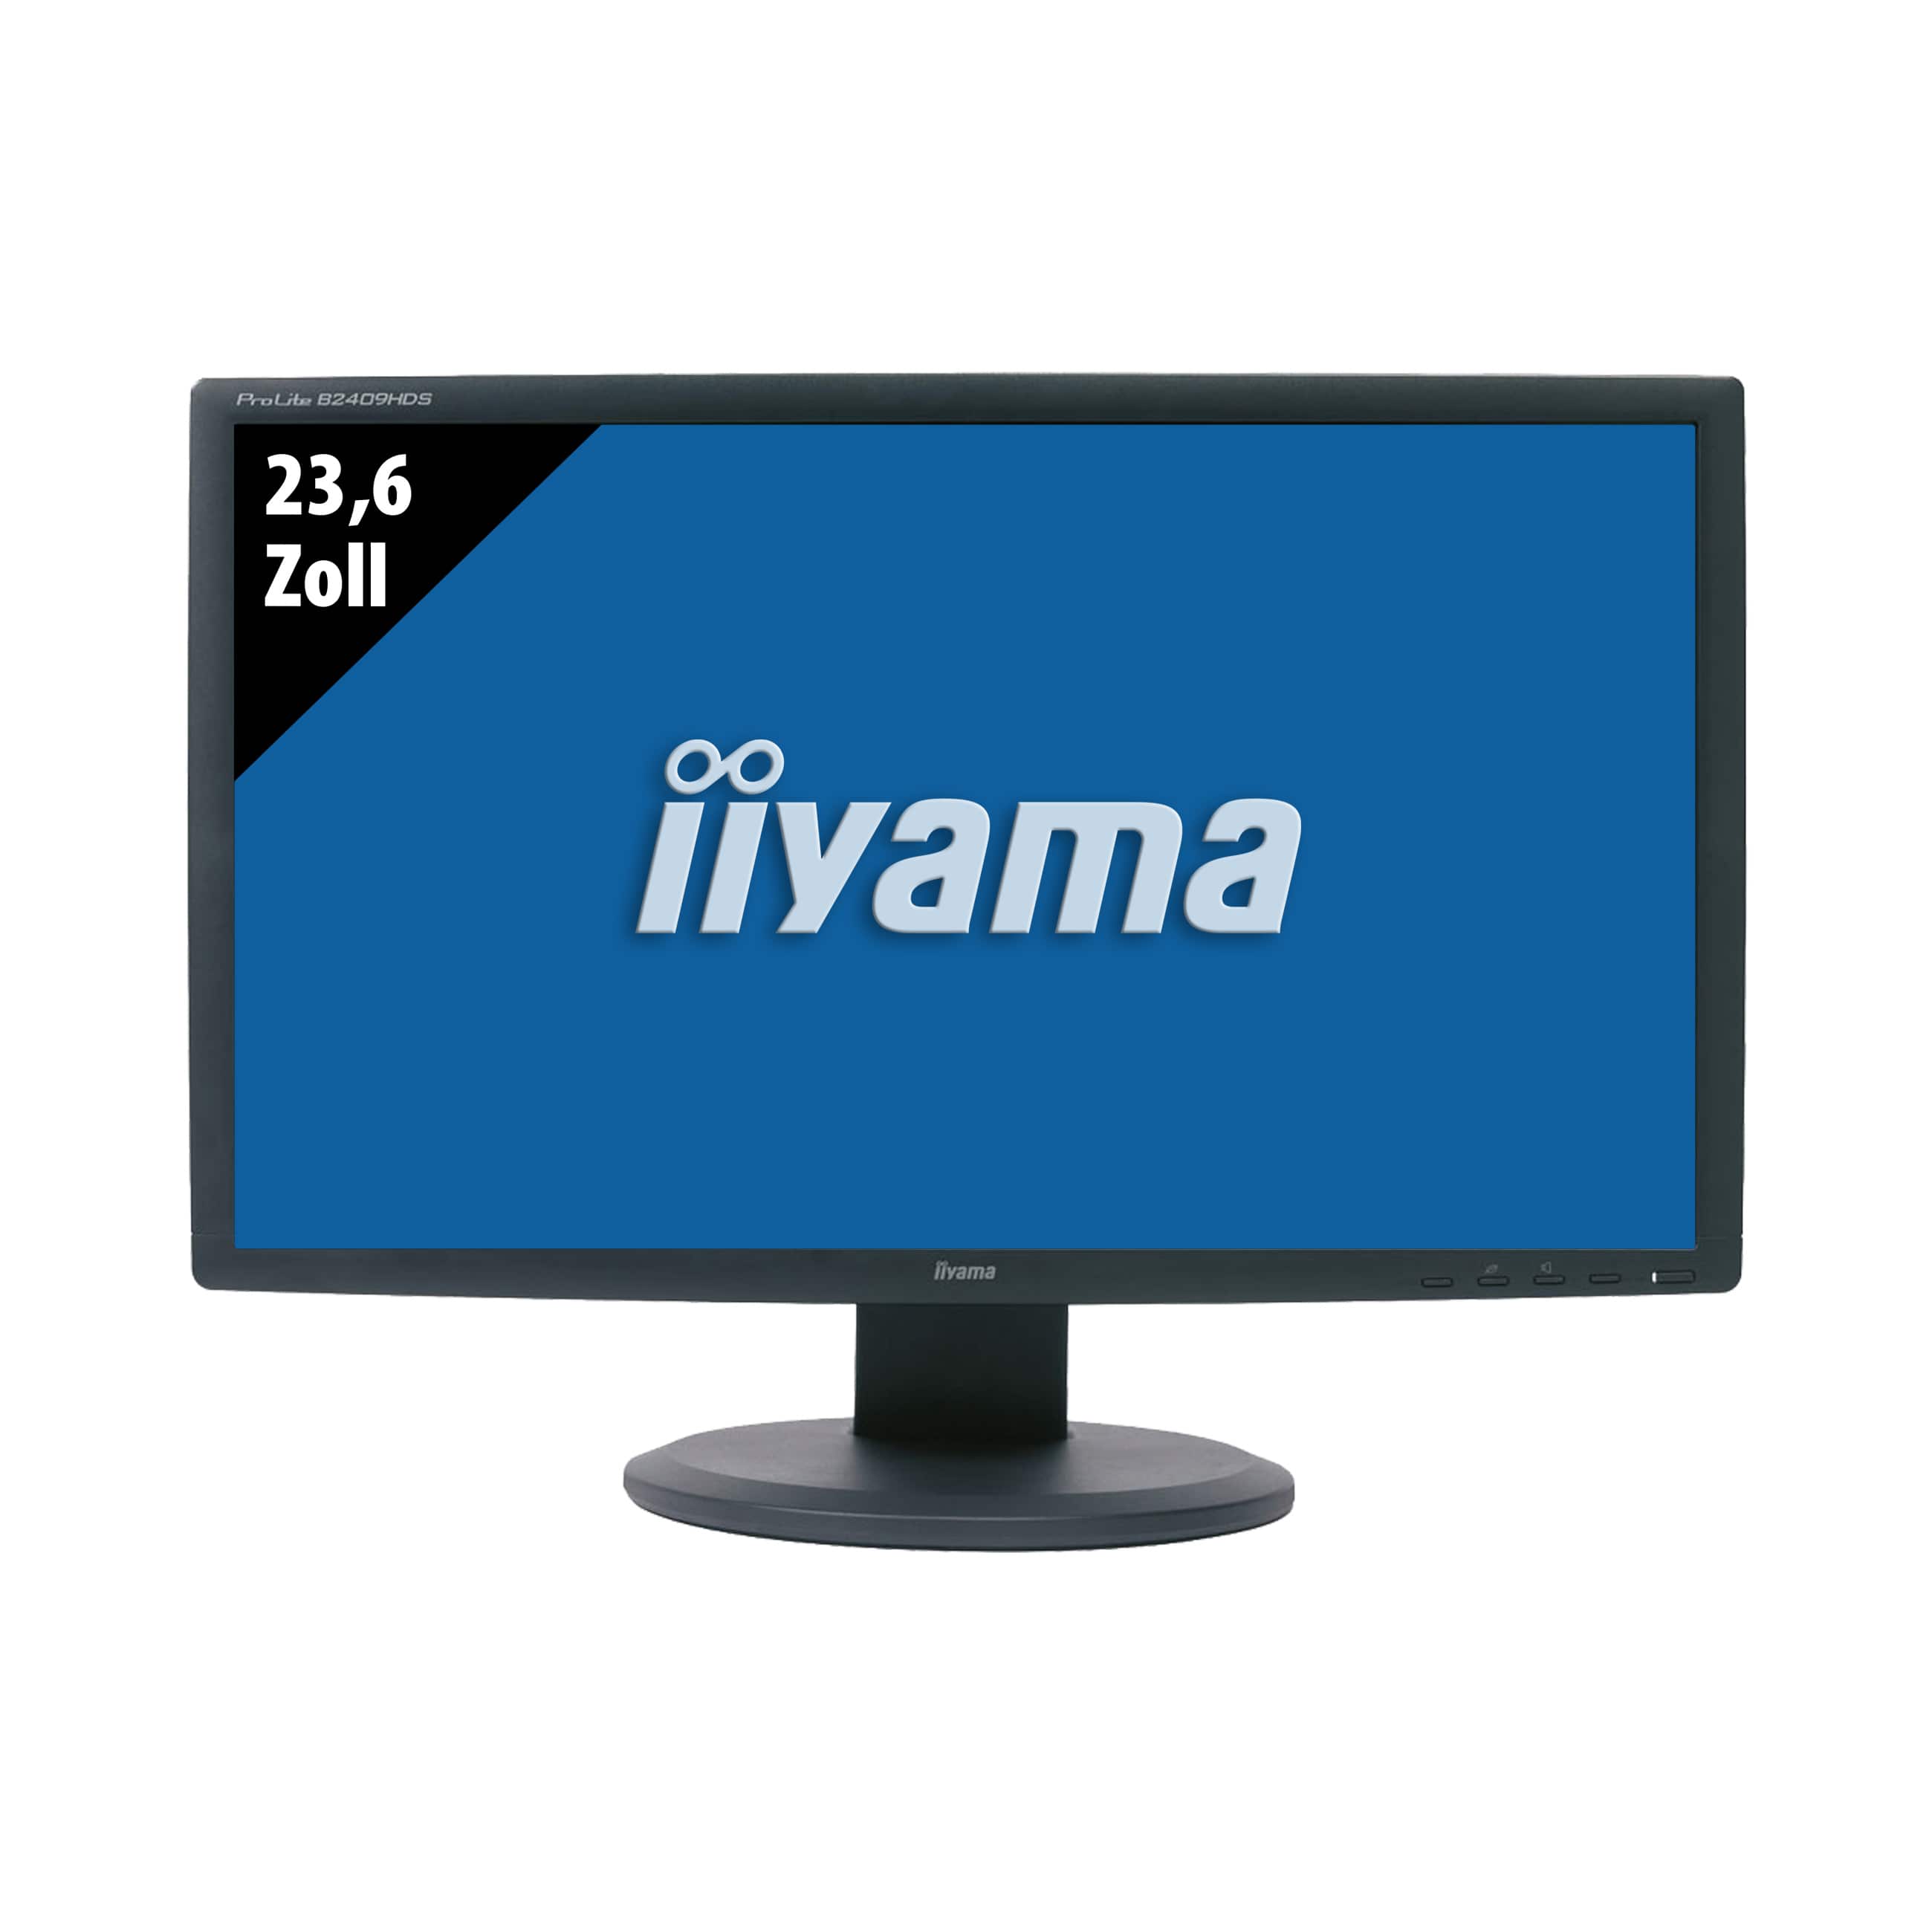 Iiyama Pro Lite B2409HDS - 1920 x 1080 - FHD - 23,6 Zoll - 2 ms - Schwarz